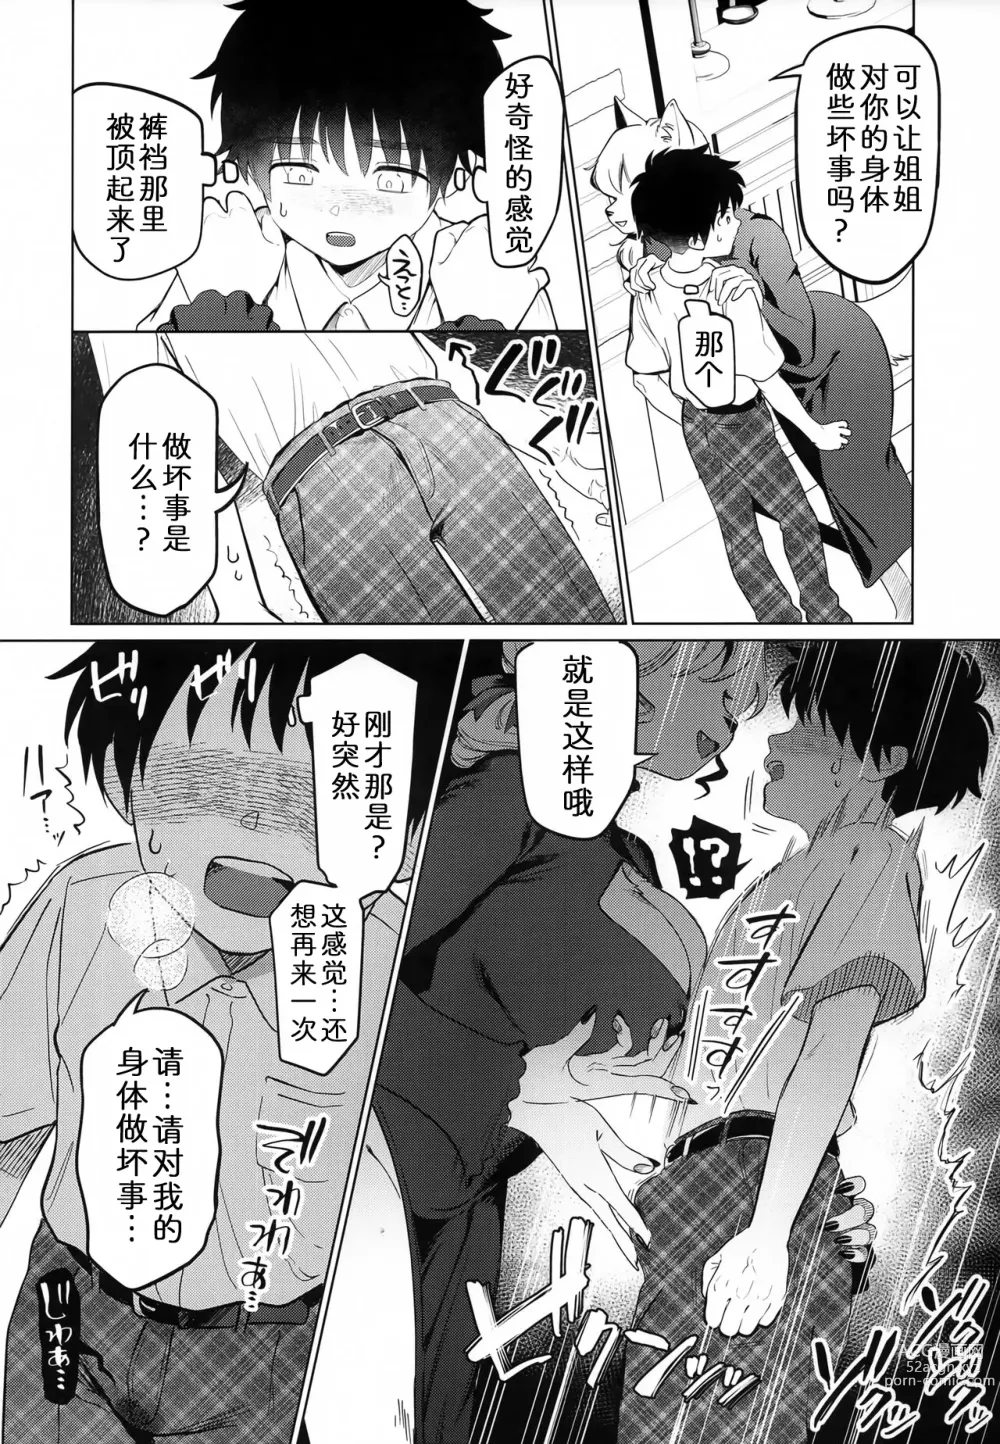 Page 7 of doujinshi 永无休止